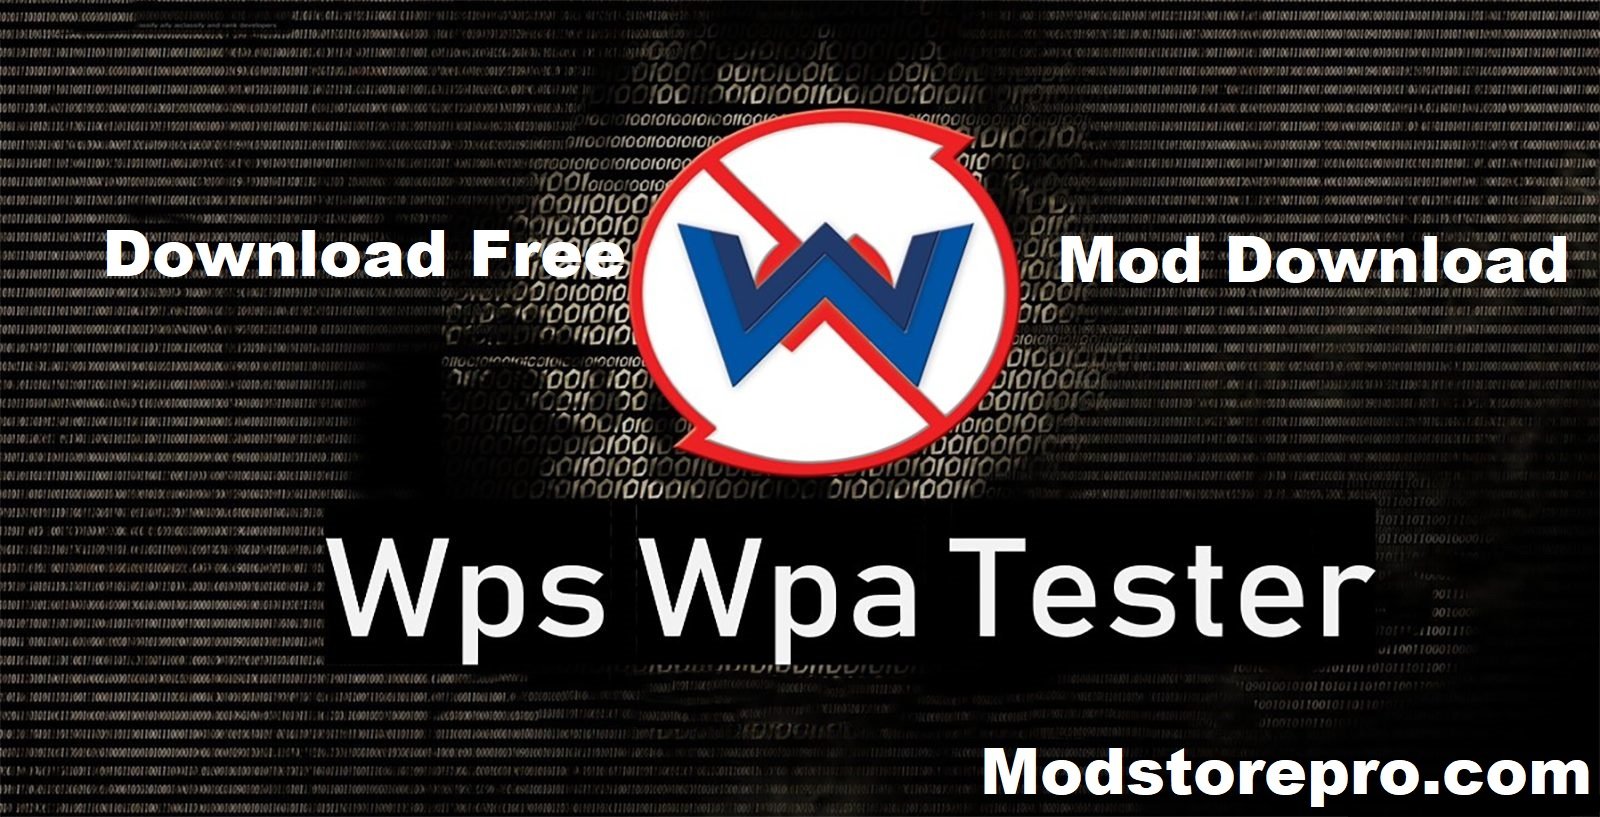 Wps Wpa Tester Premium Apk By Modstorepro